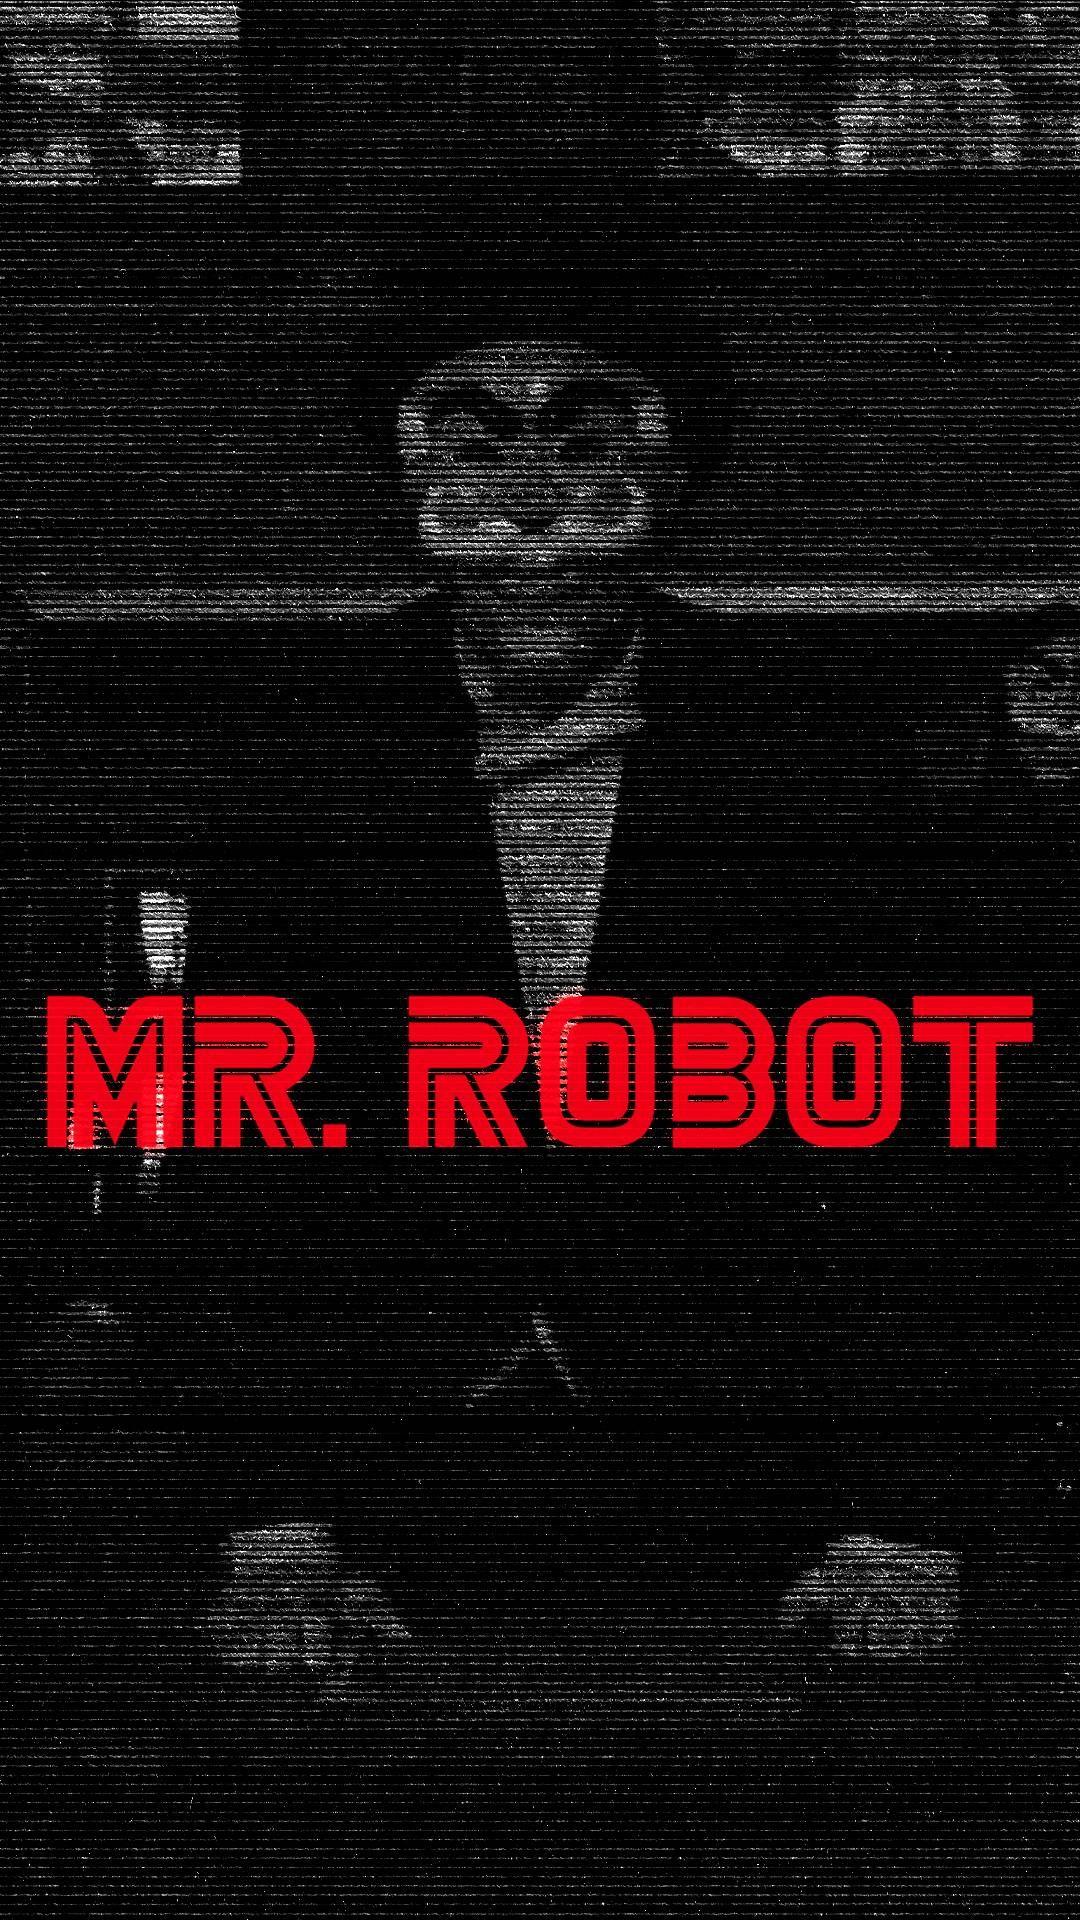 MR ROBOT wallpaper. Robot wallpaper, Mr robot poster, Mr robot